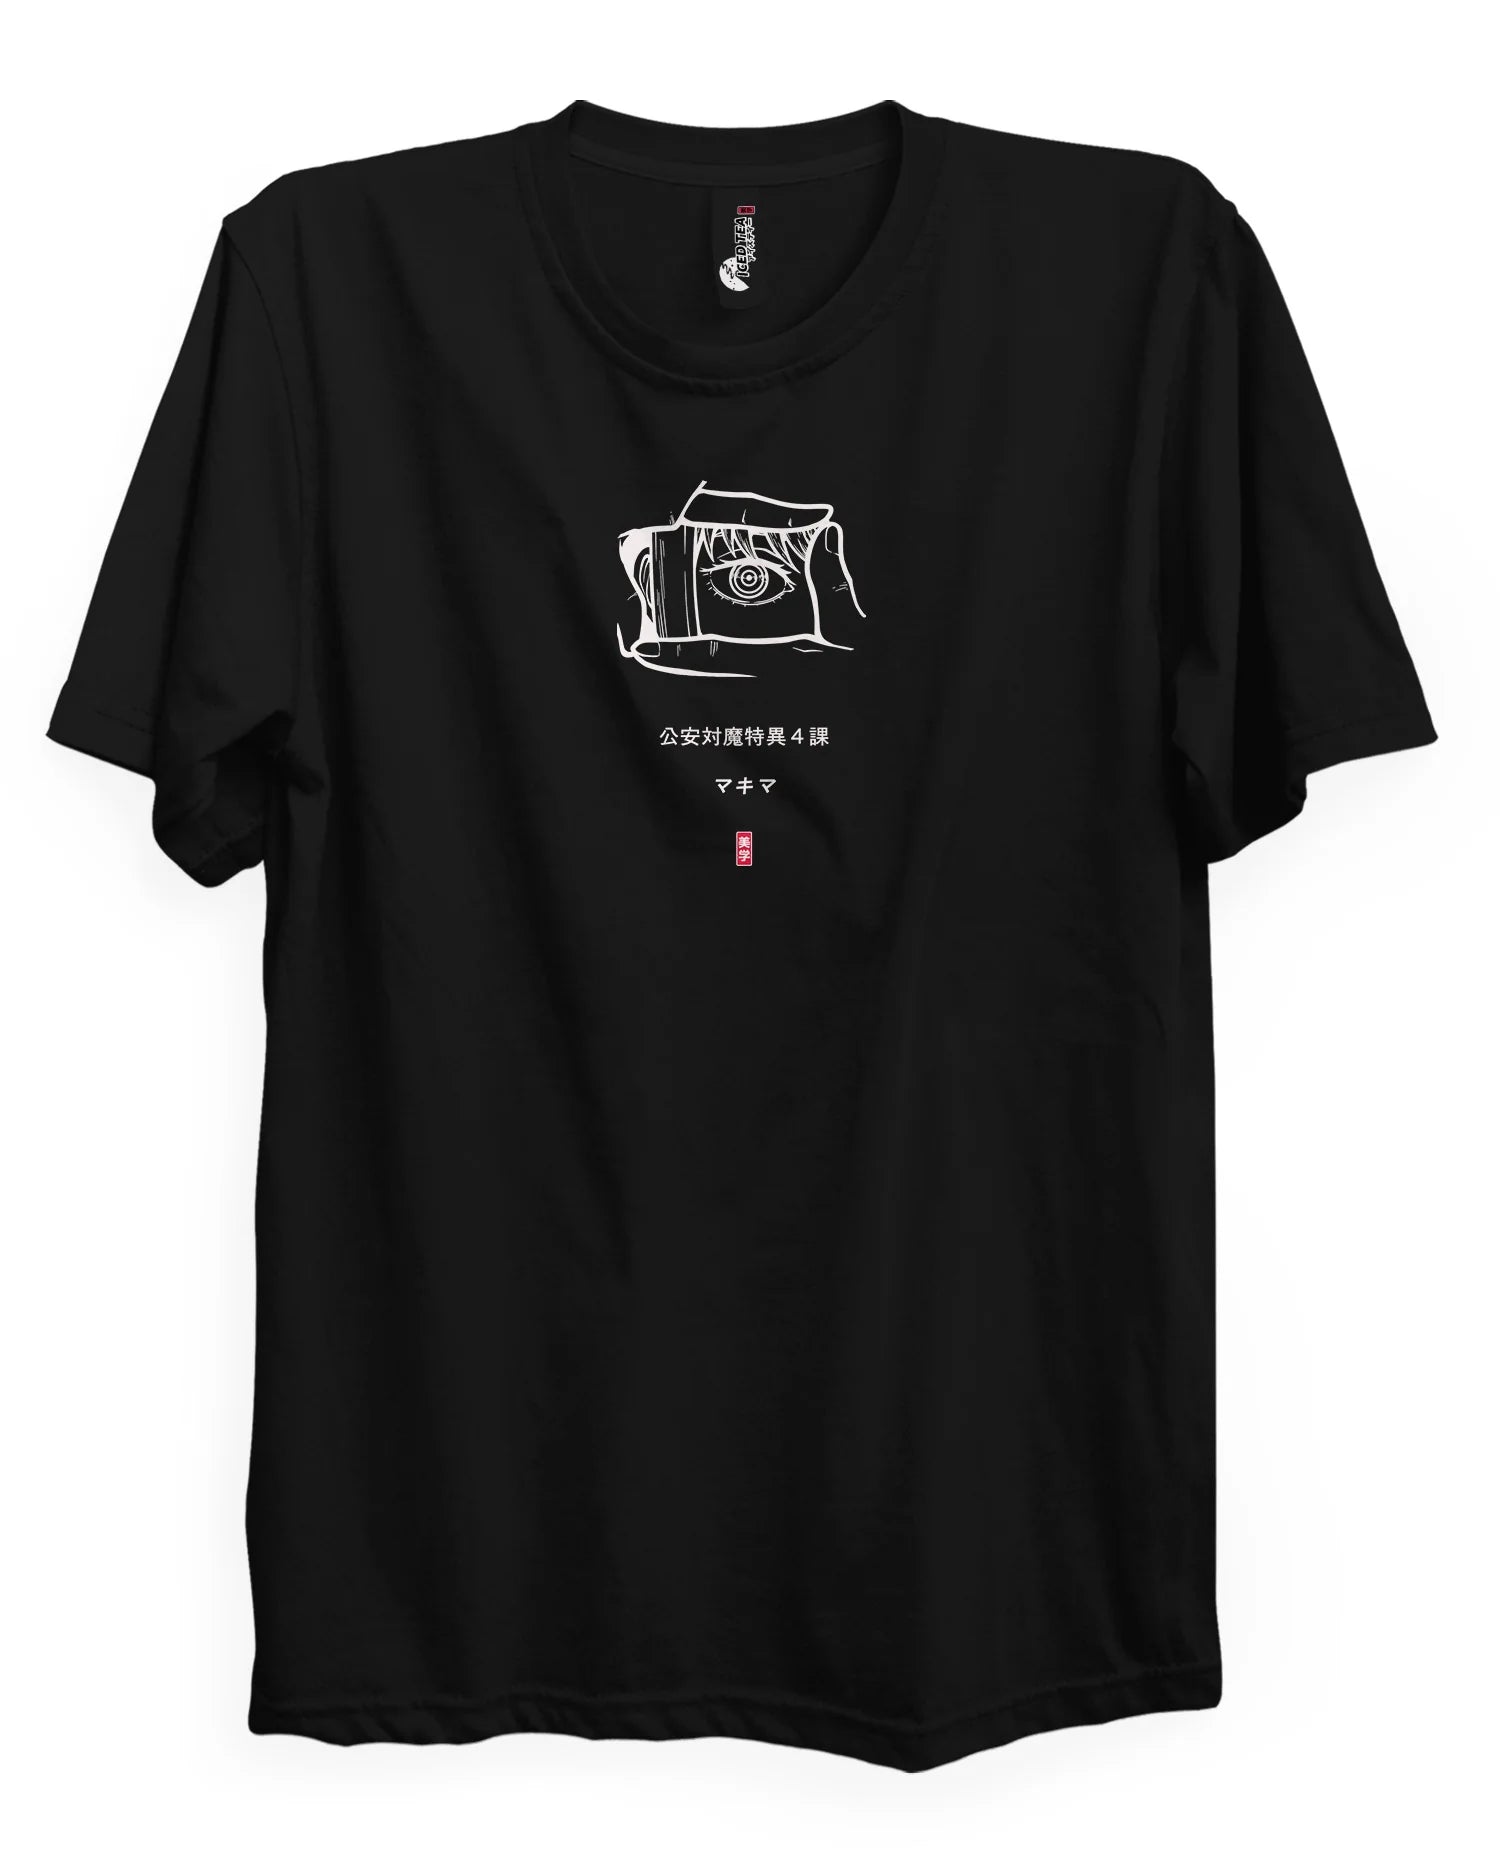 MAKIMA (Hunter) - T-Shirt Back Print